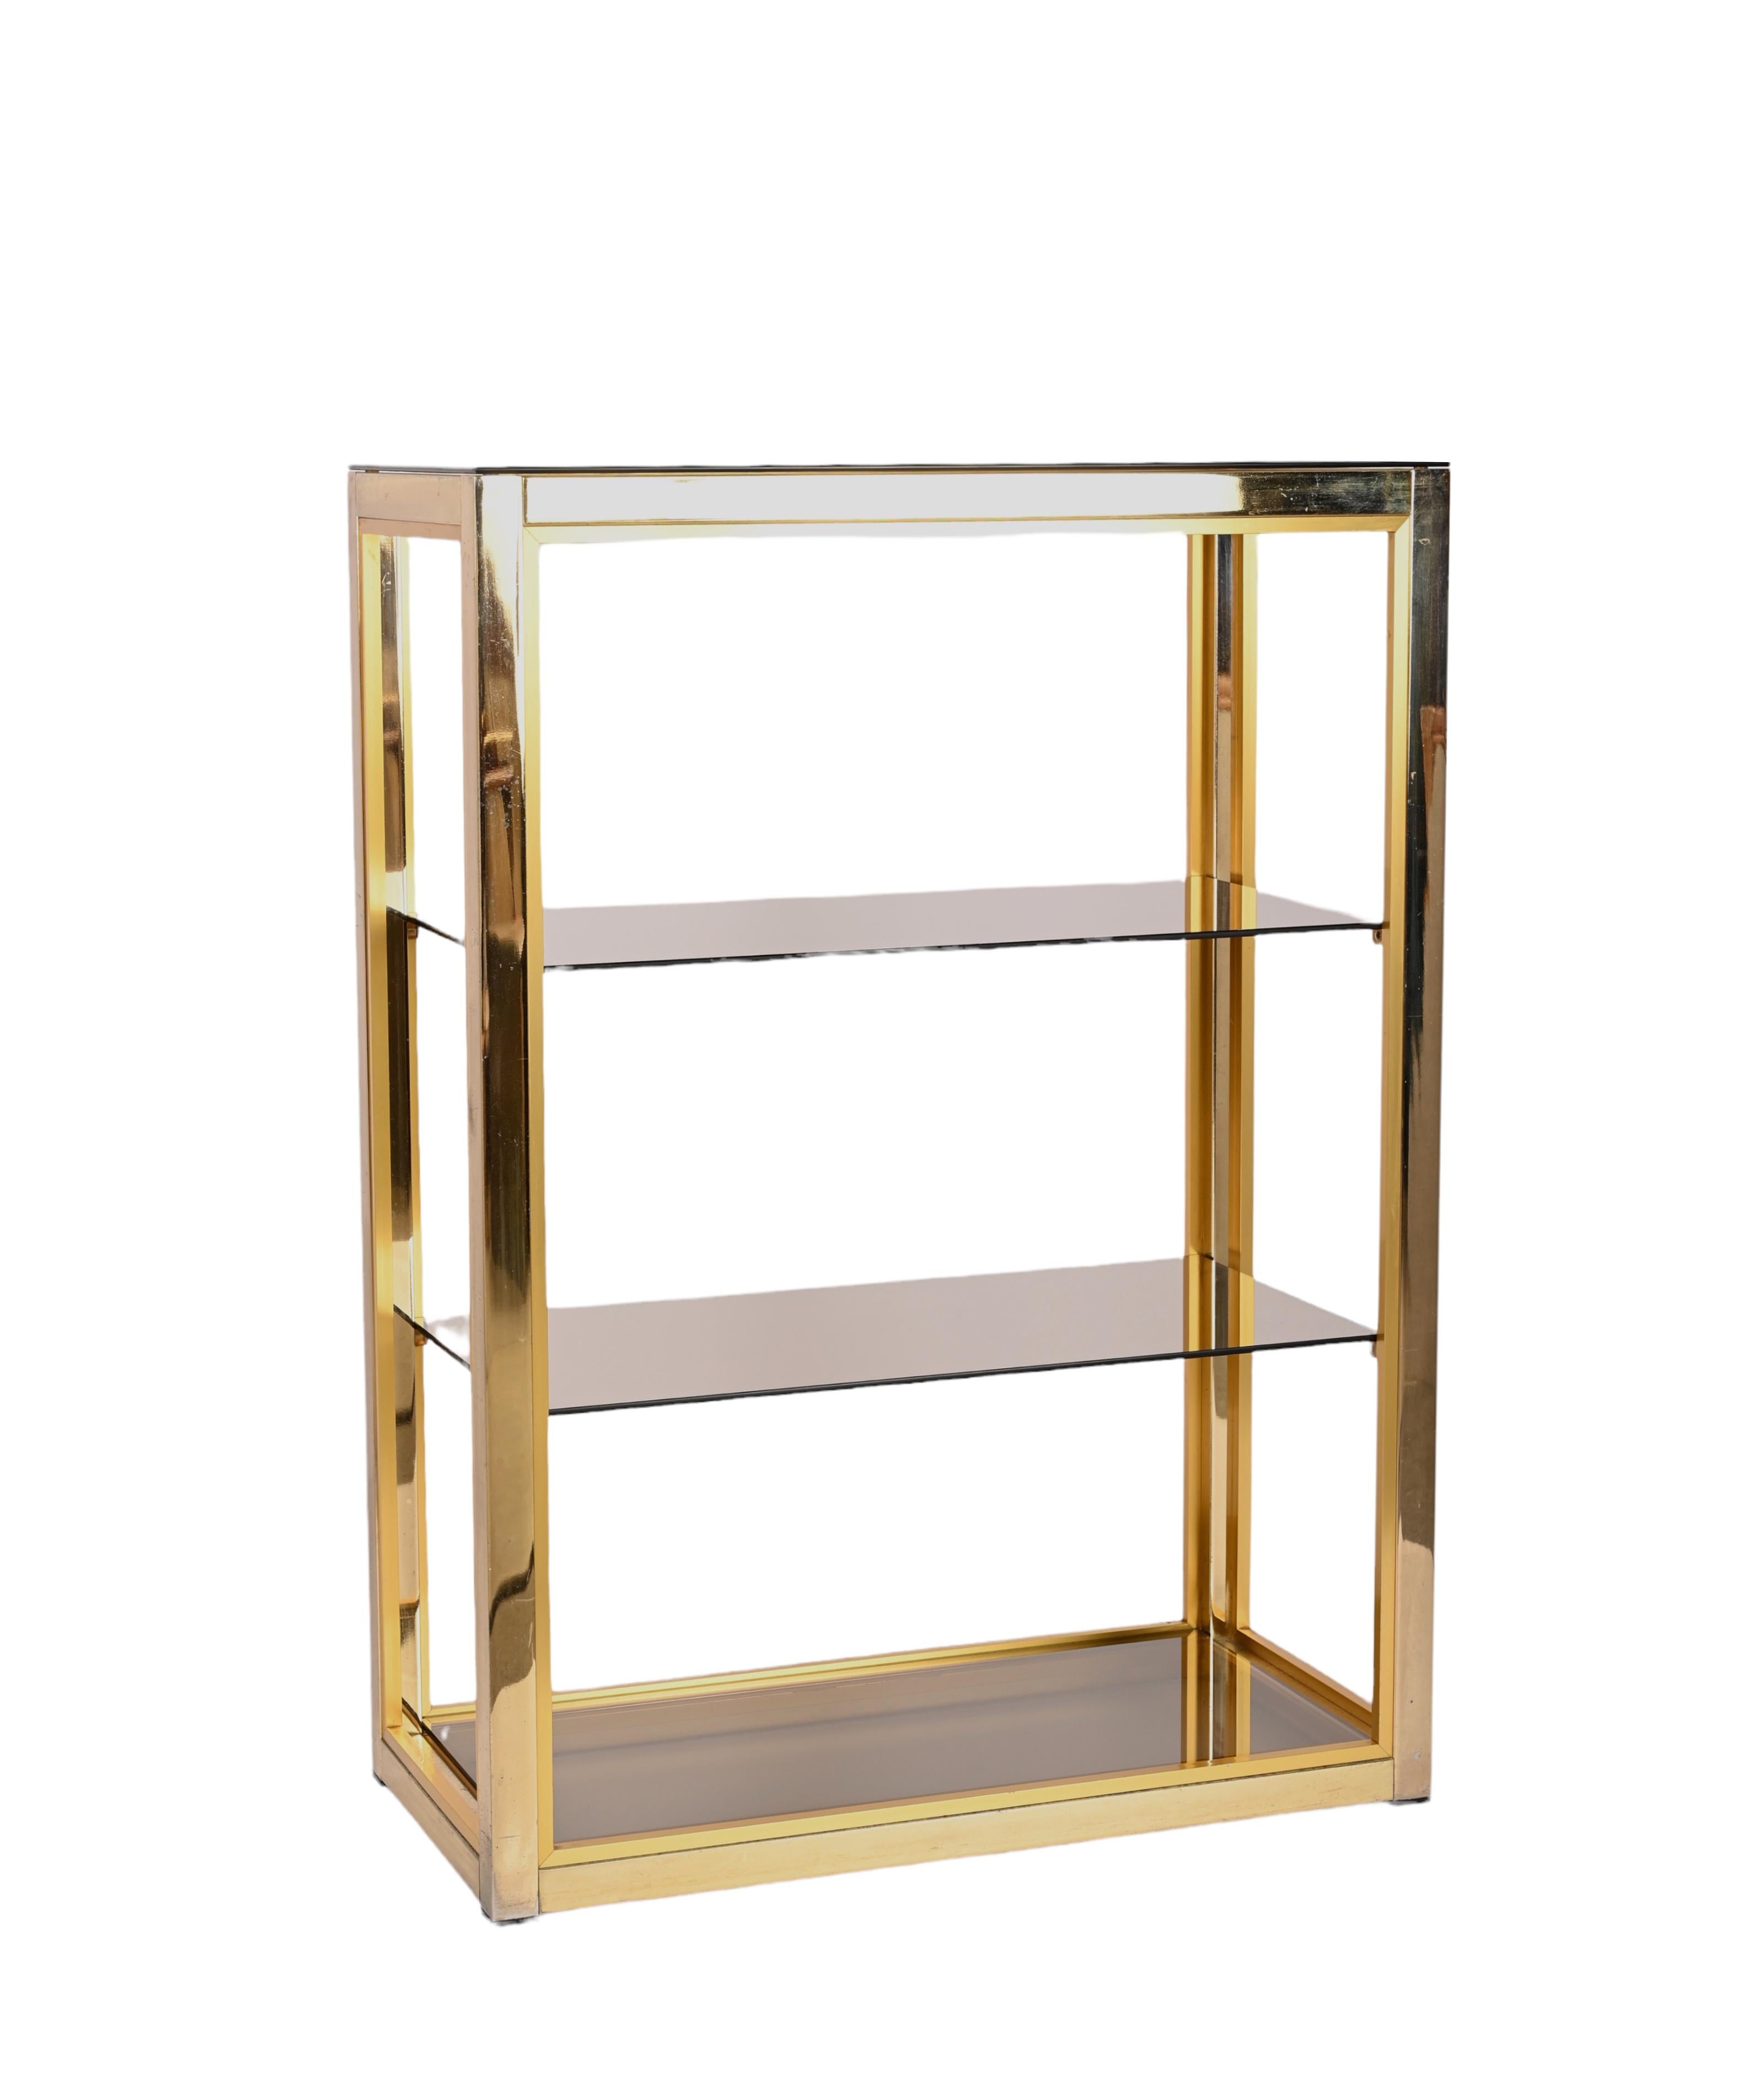 Renato Zevi Gilded Brass Italian Bookcase with Glass Shelves, Romeo Rega 1970s For Sale 8